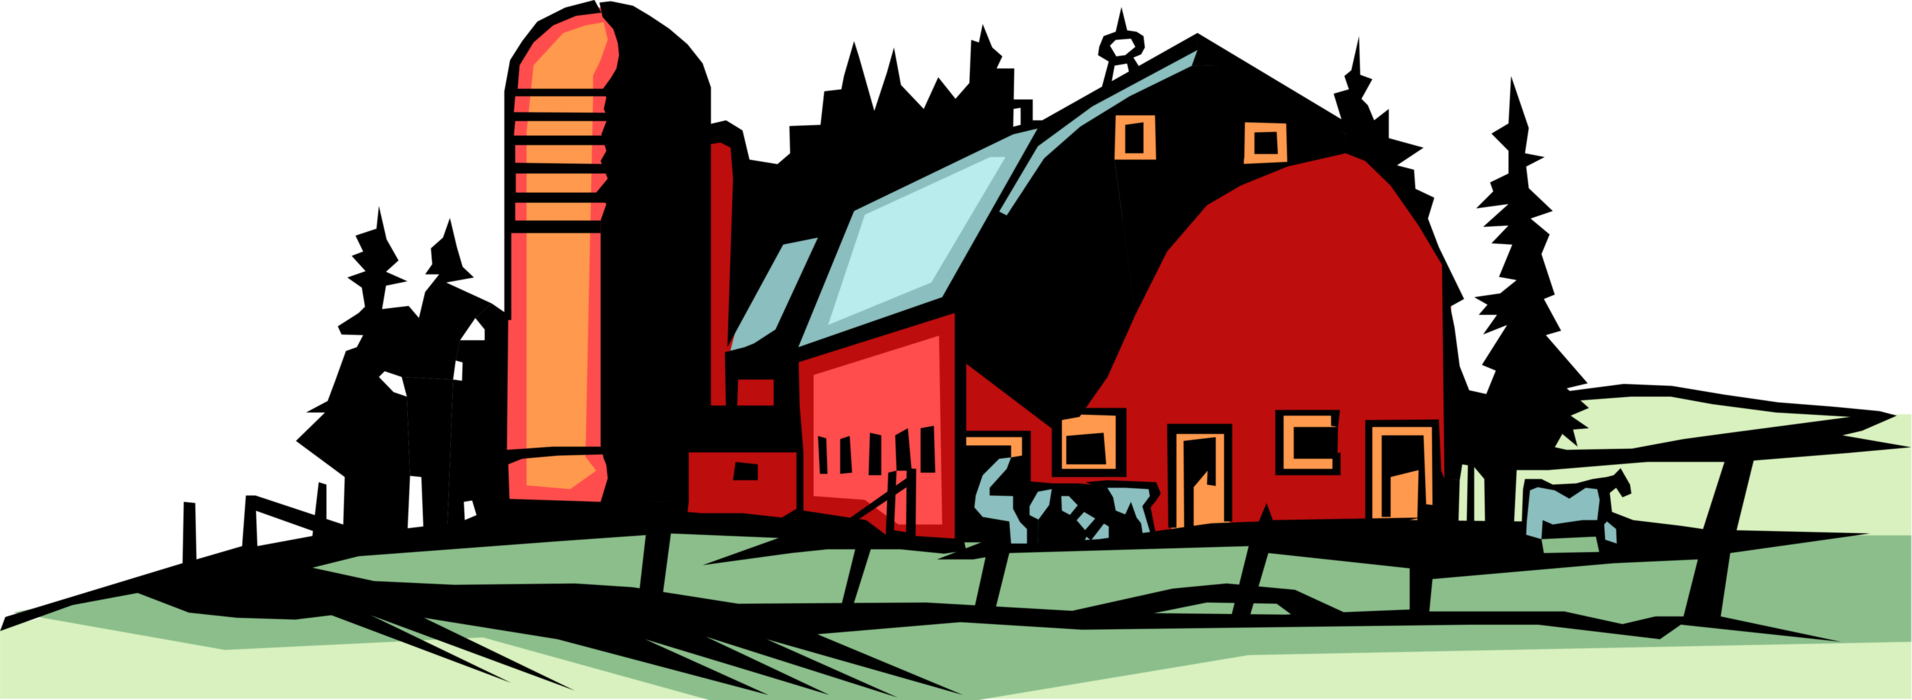 Vector Illustration of Farm Red Barn with Grain Harvest Storage Silo